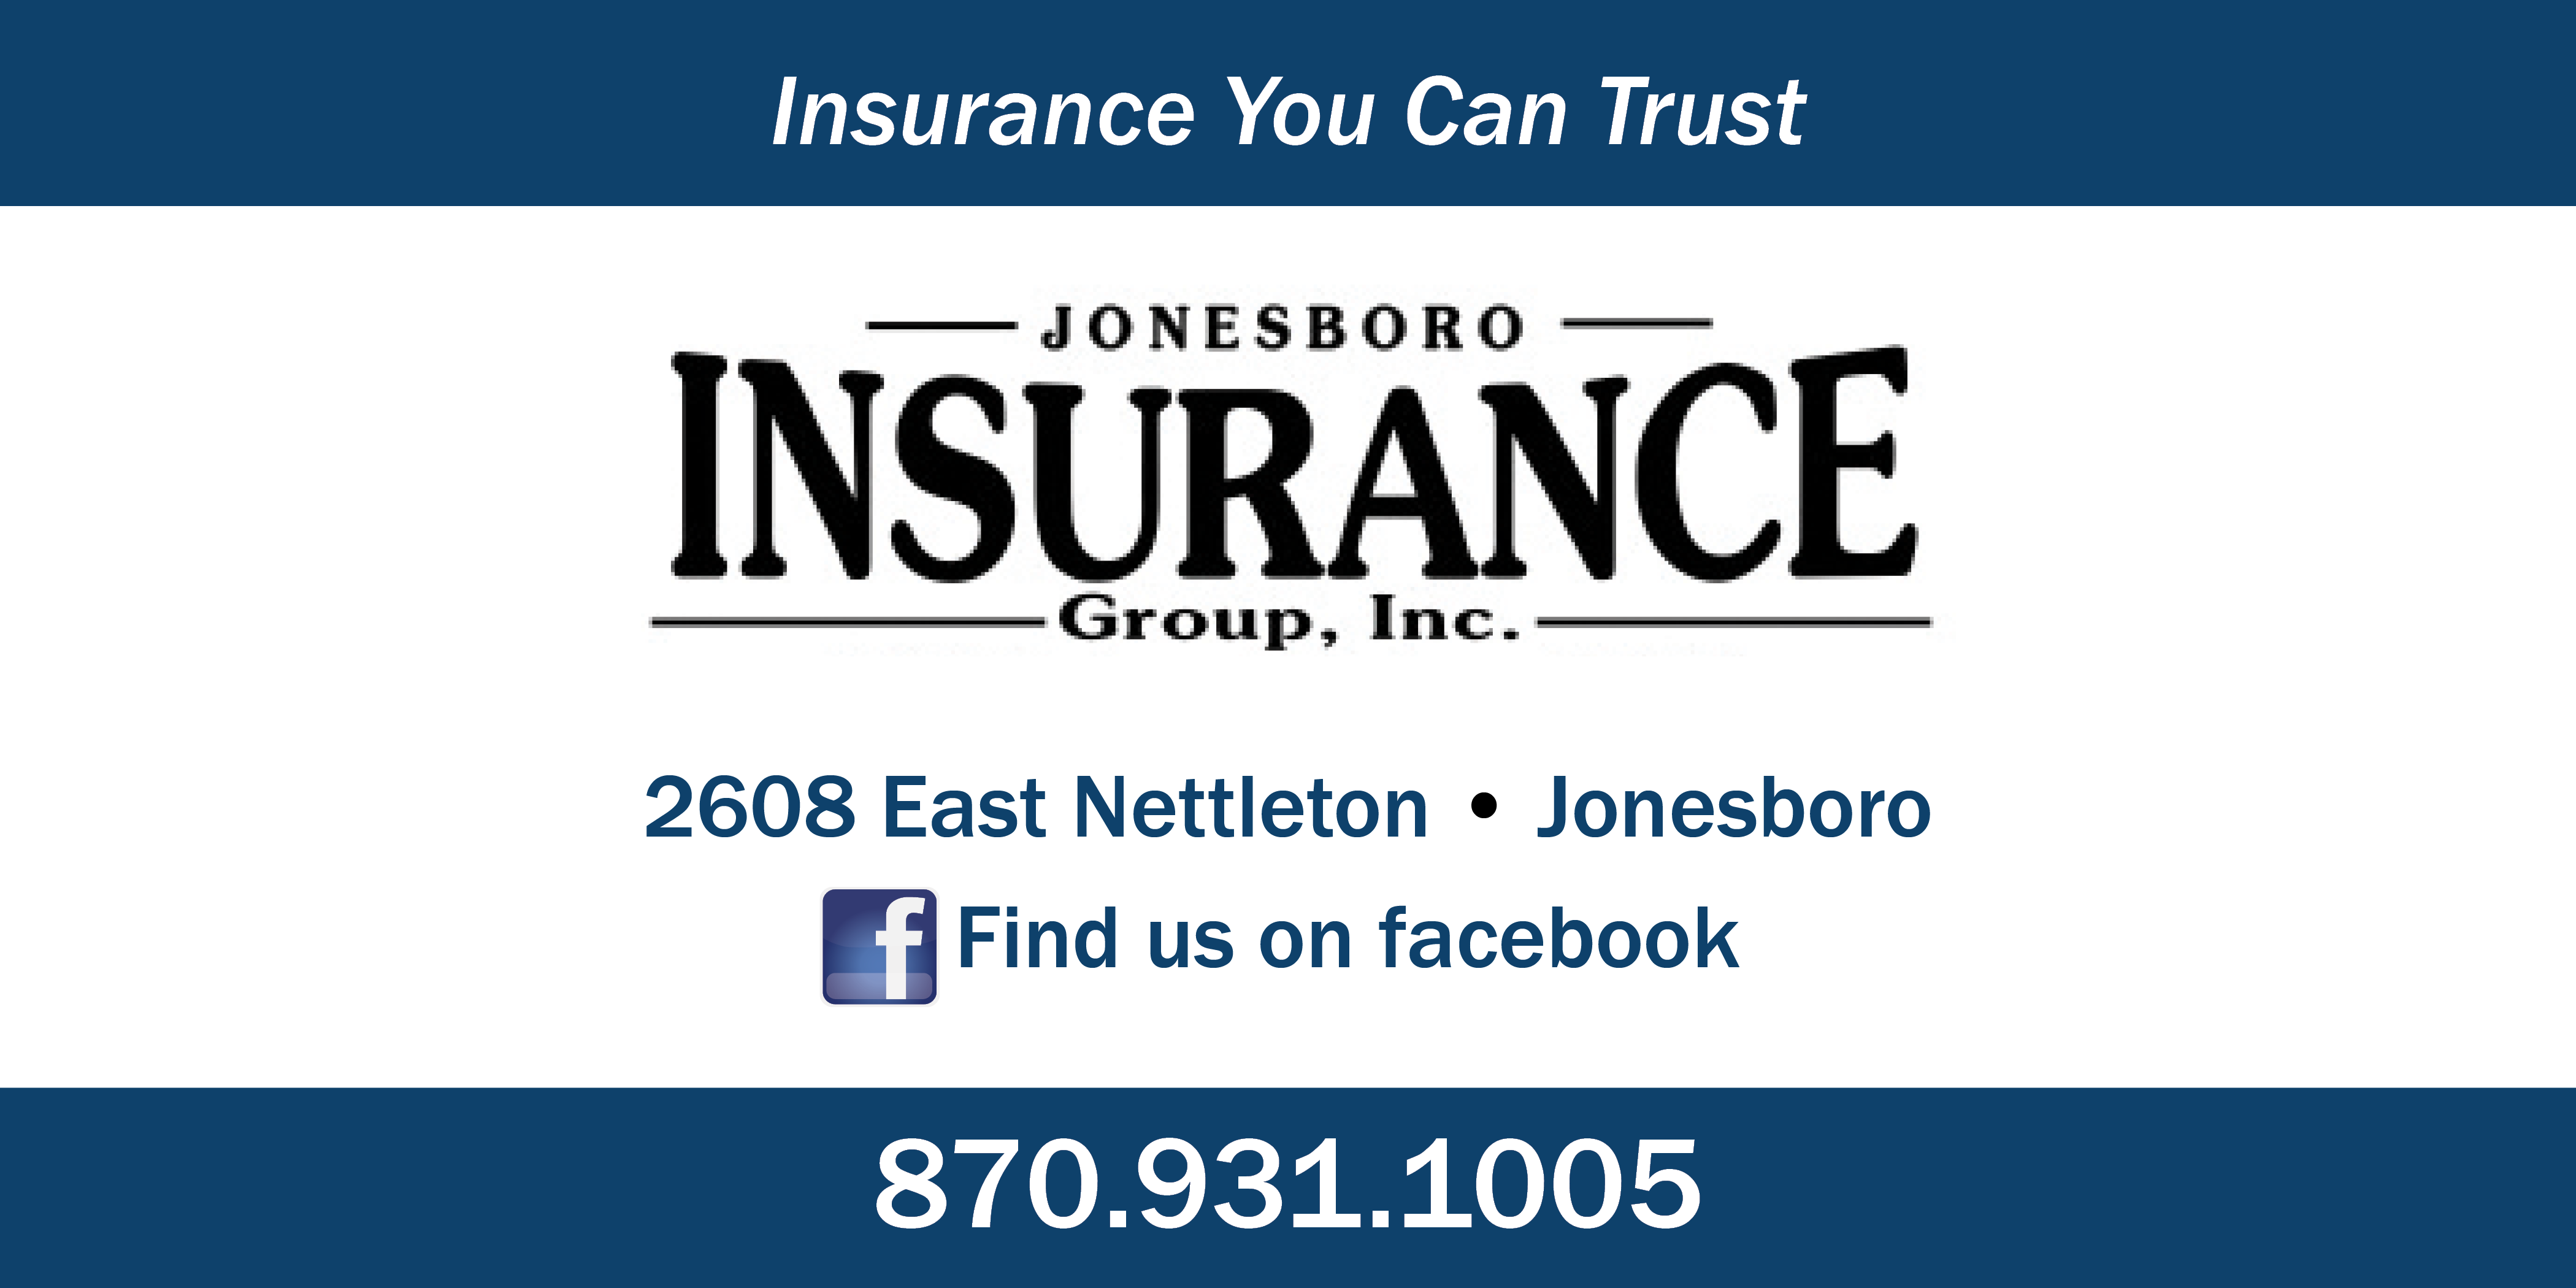 Jonesboro Insurance Group, Inc.